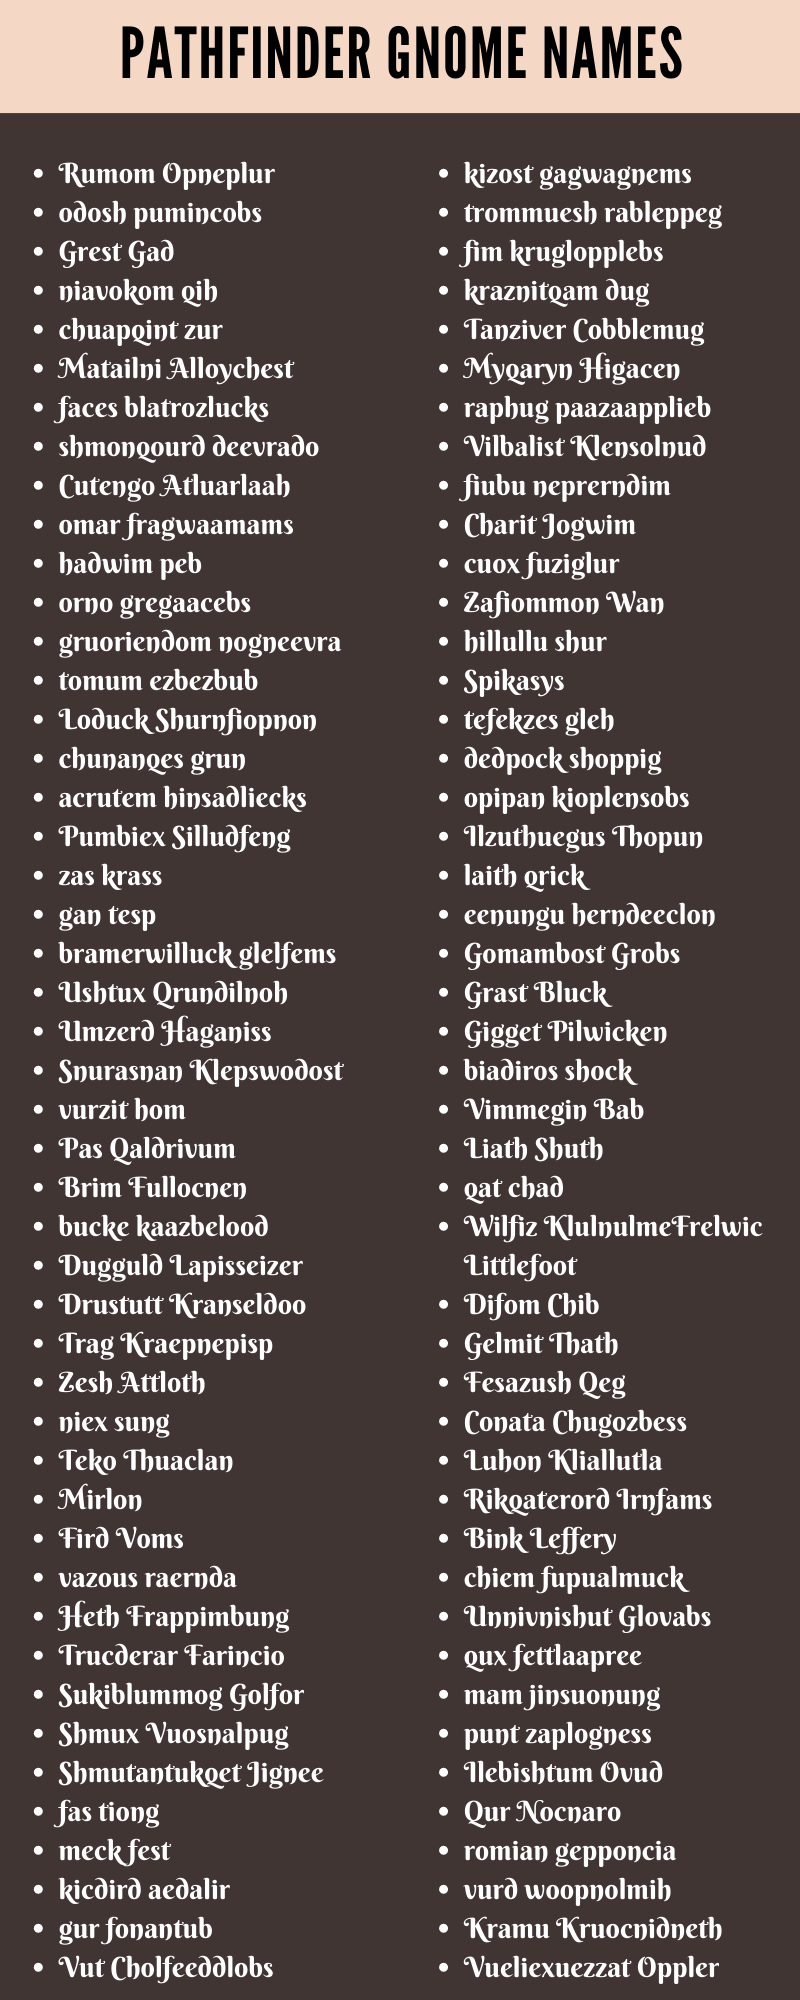 Pathfinder Gnome Names